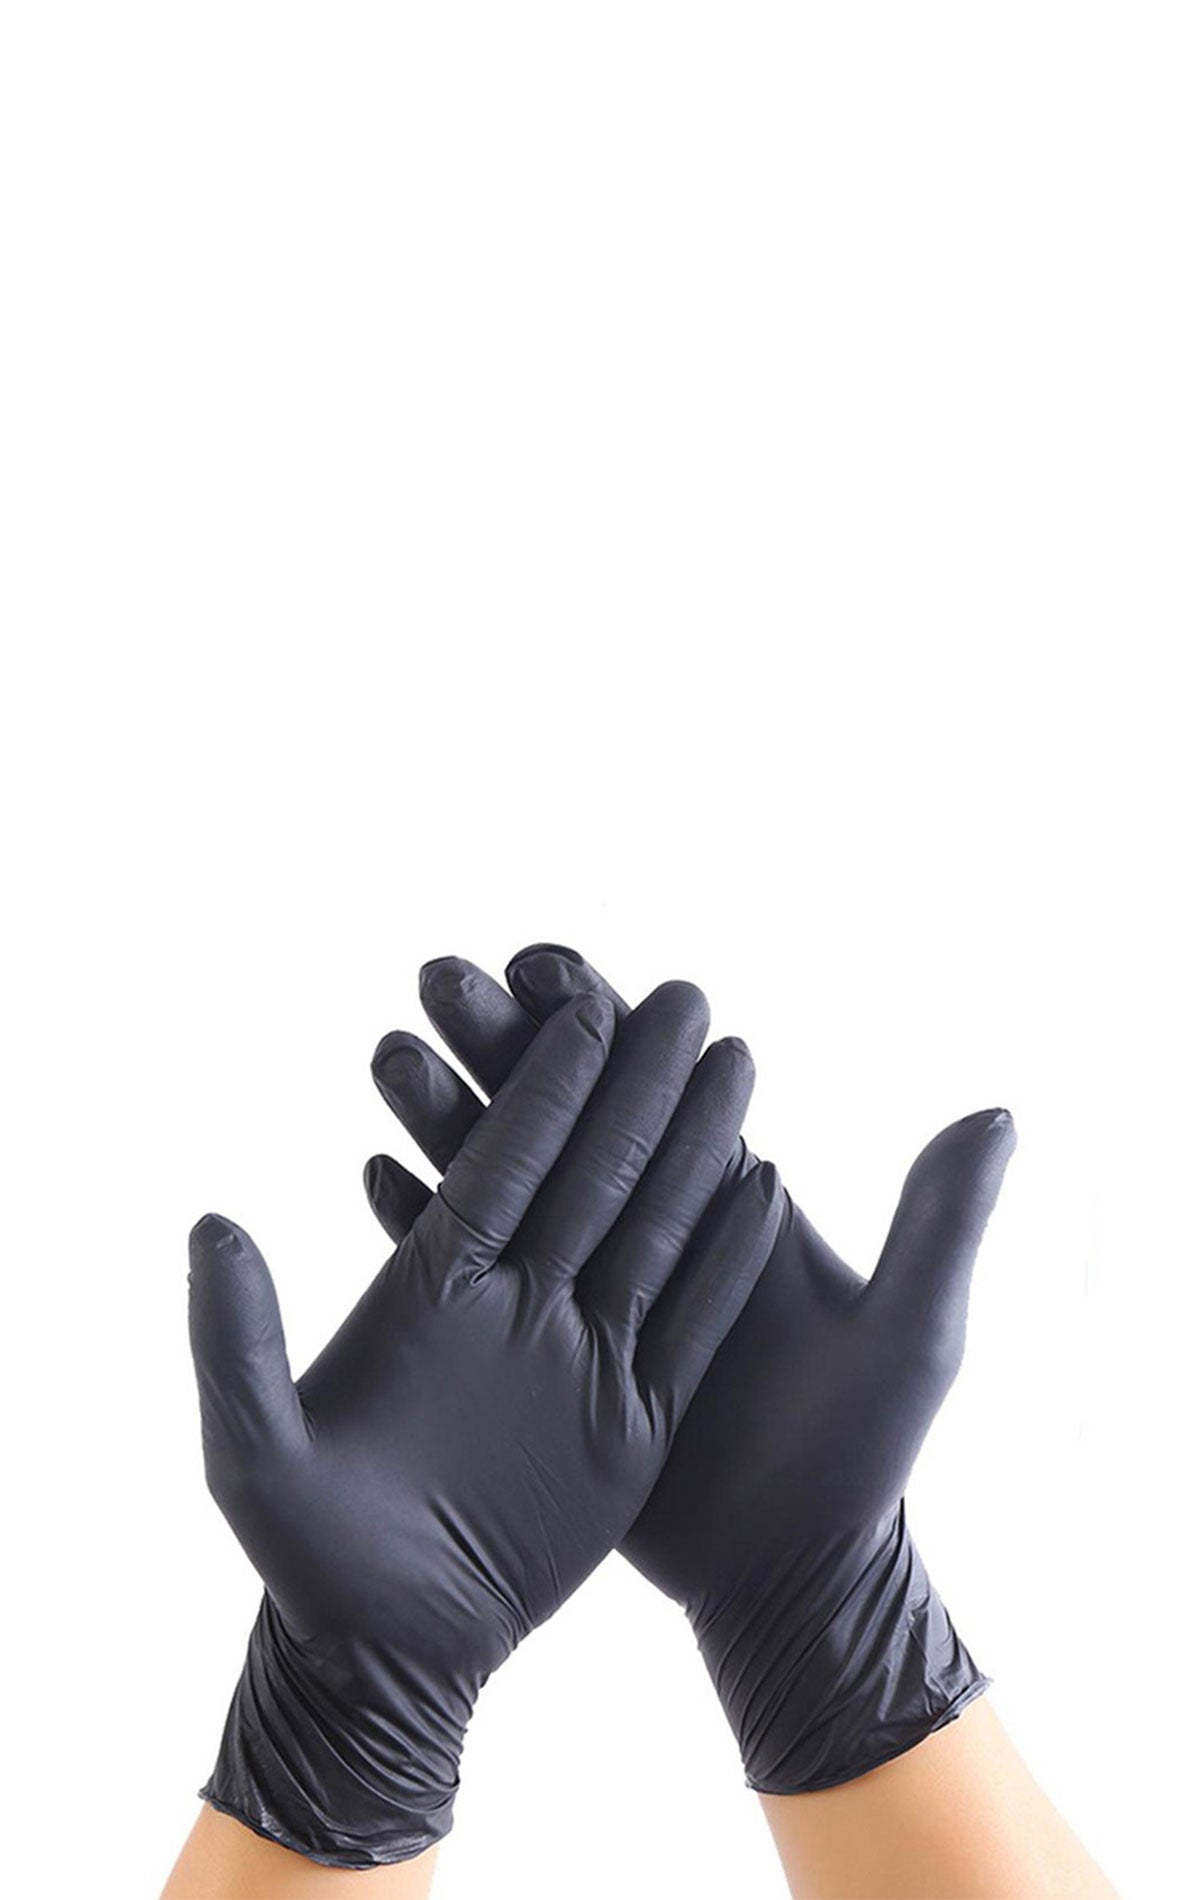 Black Nitrile Disposable Gloves Pack of 100